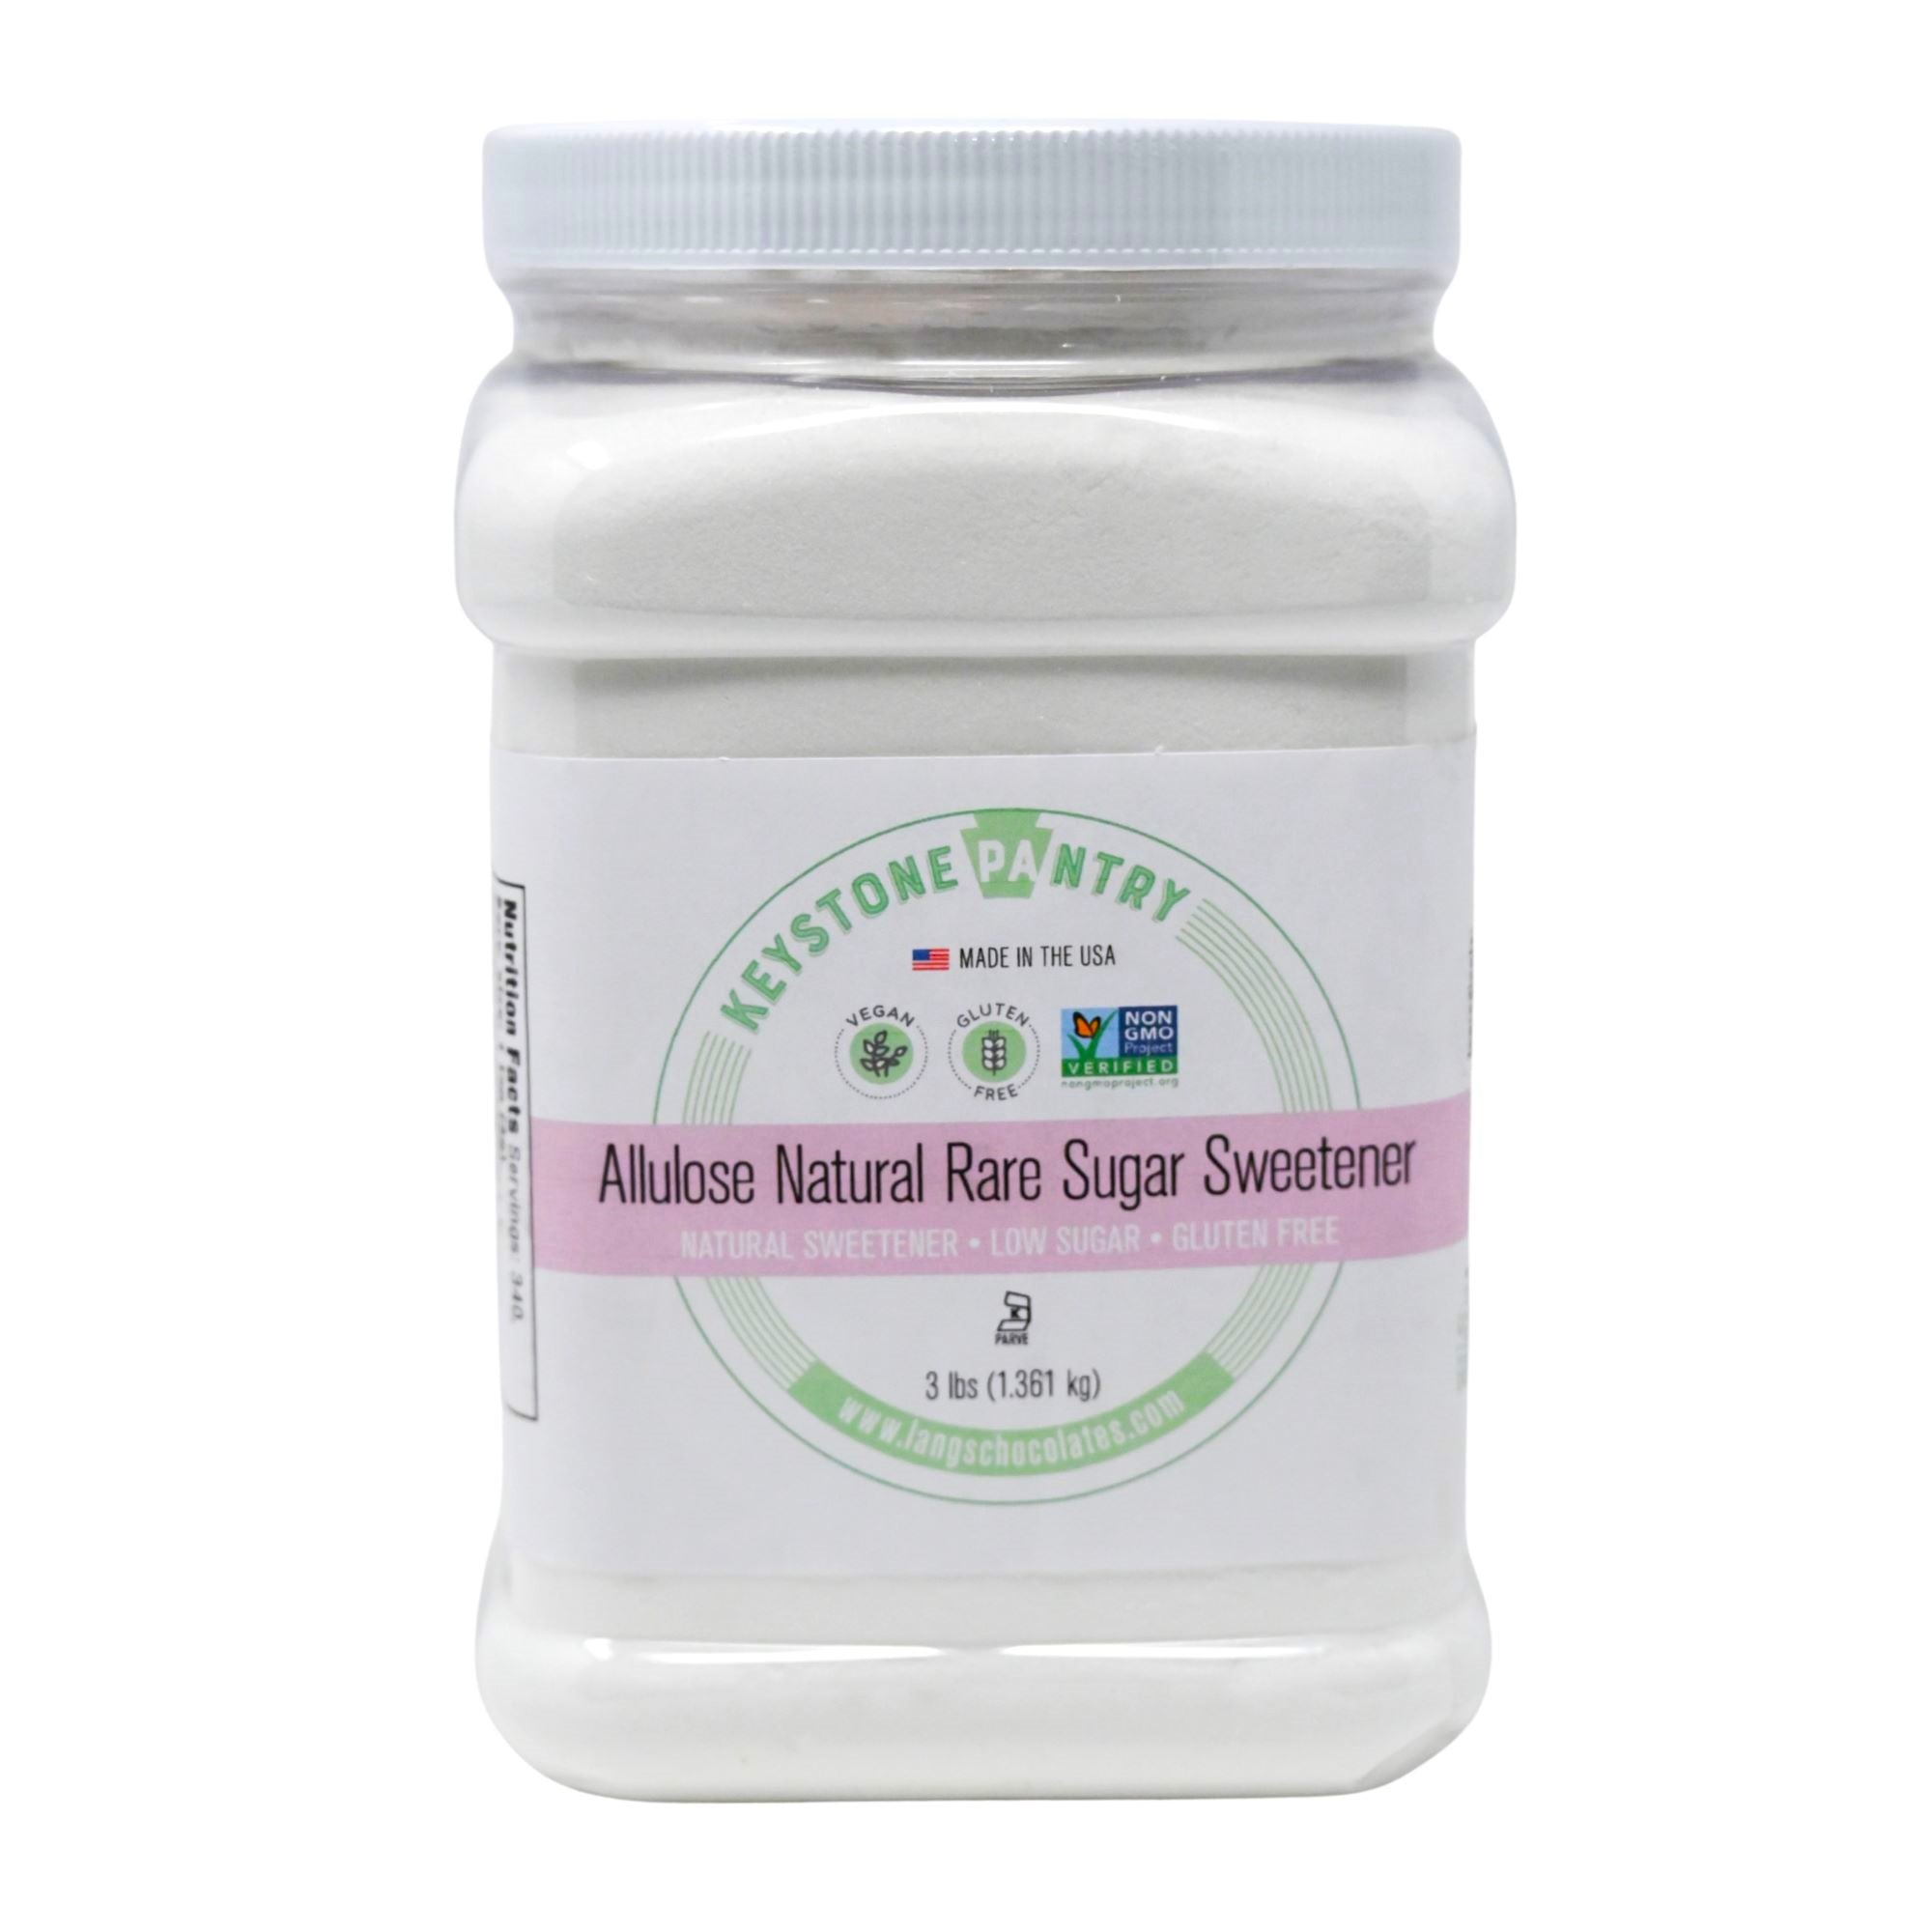 Keystone Pantry's Allulose Natural Sweetener